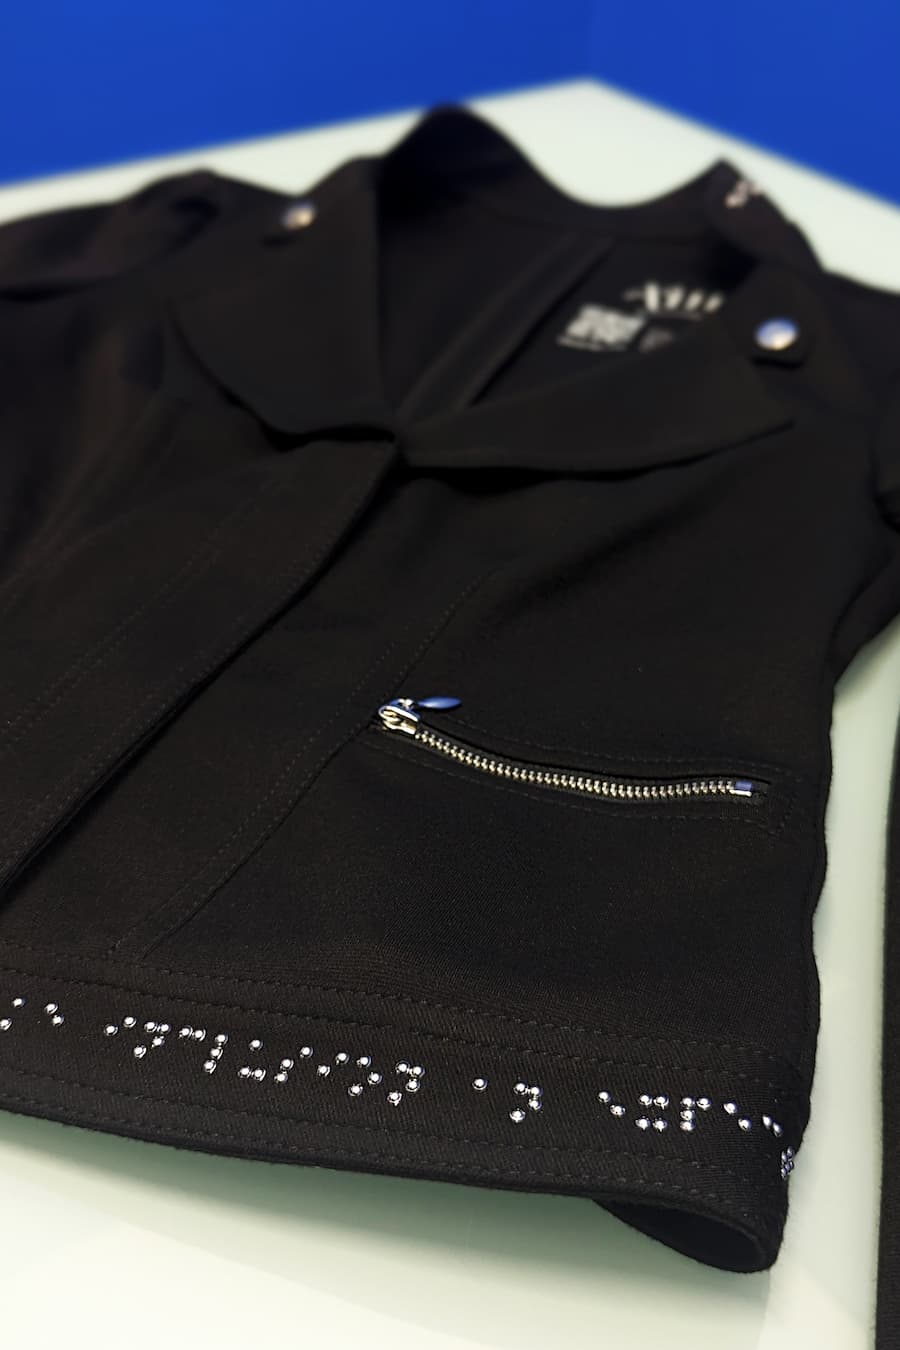 Detail photo of braille on hem/waistband of motto jacket